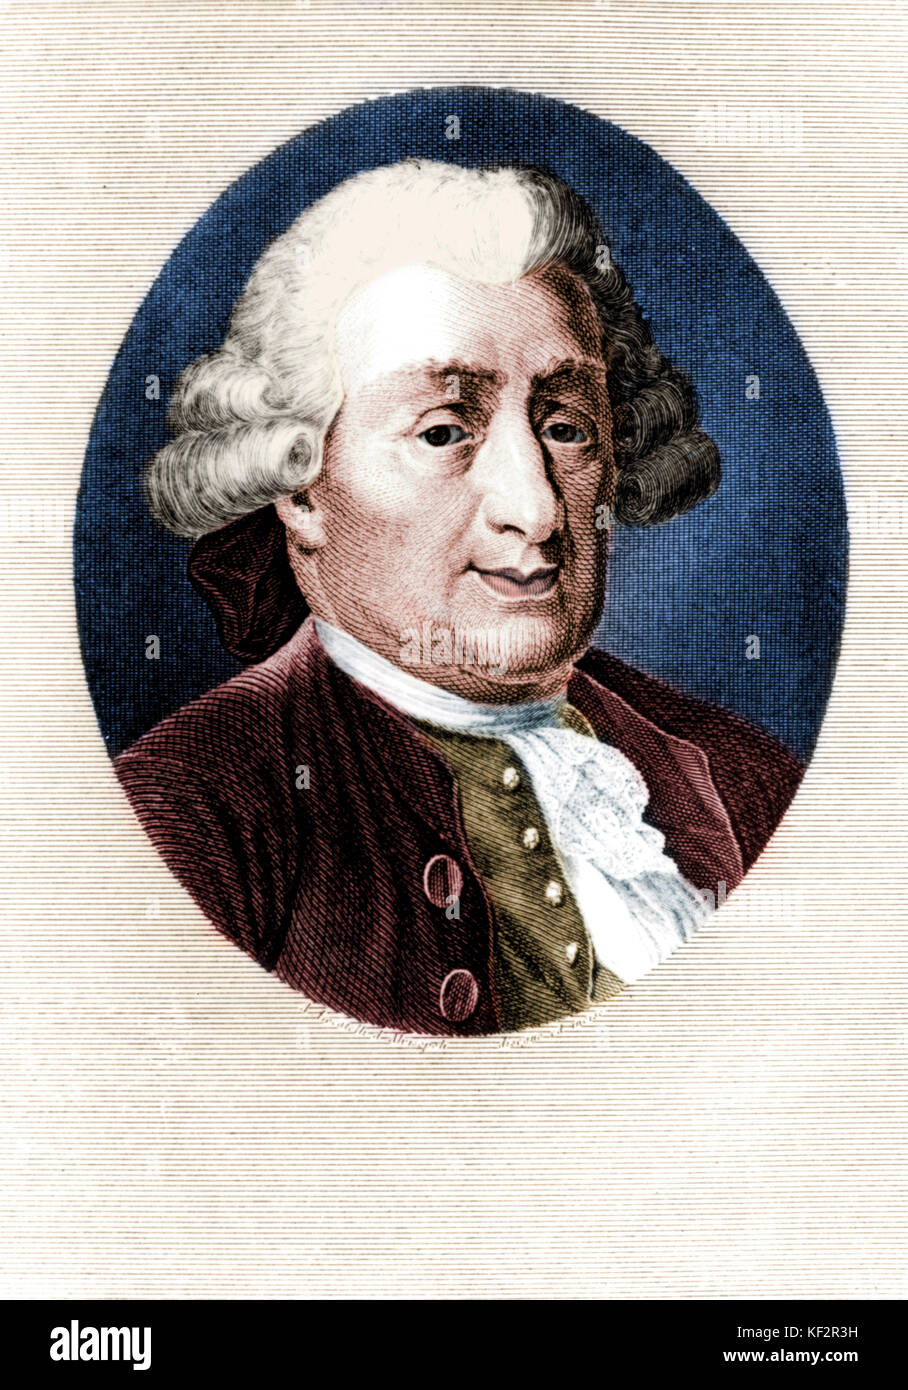 Carlo Goldoni portrait. Italian playwright and librettist, 1707-1793.  Music based on his work by Haydn, Gluck, Galuppi, Sinigaglia, Piccinni, Paisiello, Malipiero, Wagenaar and others. Colourised version. Stock Photo